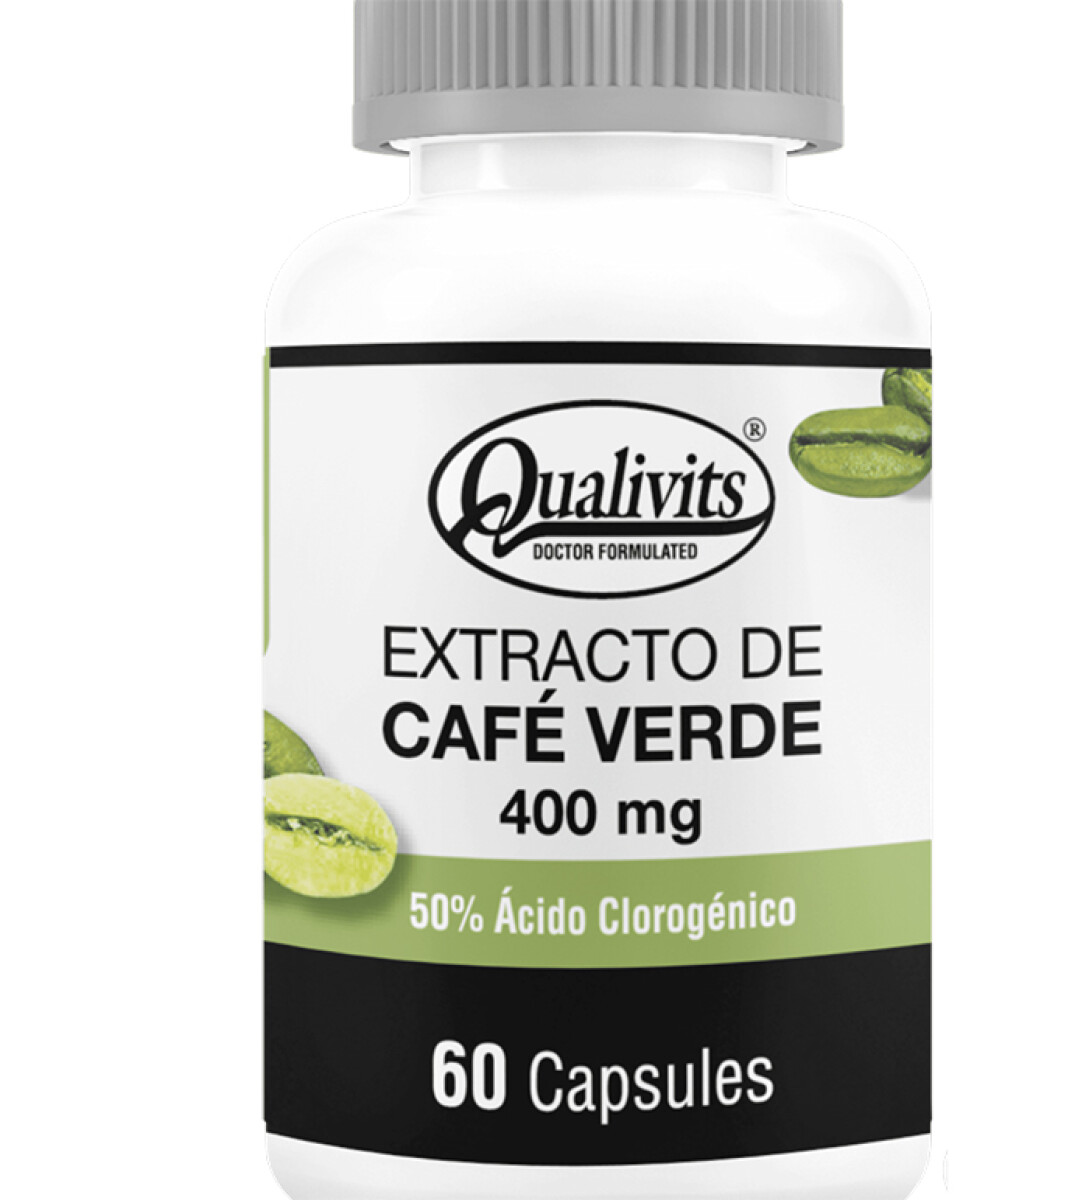 Qualivits - Extracto de Cafe Verde - 60 Capsulas 